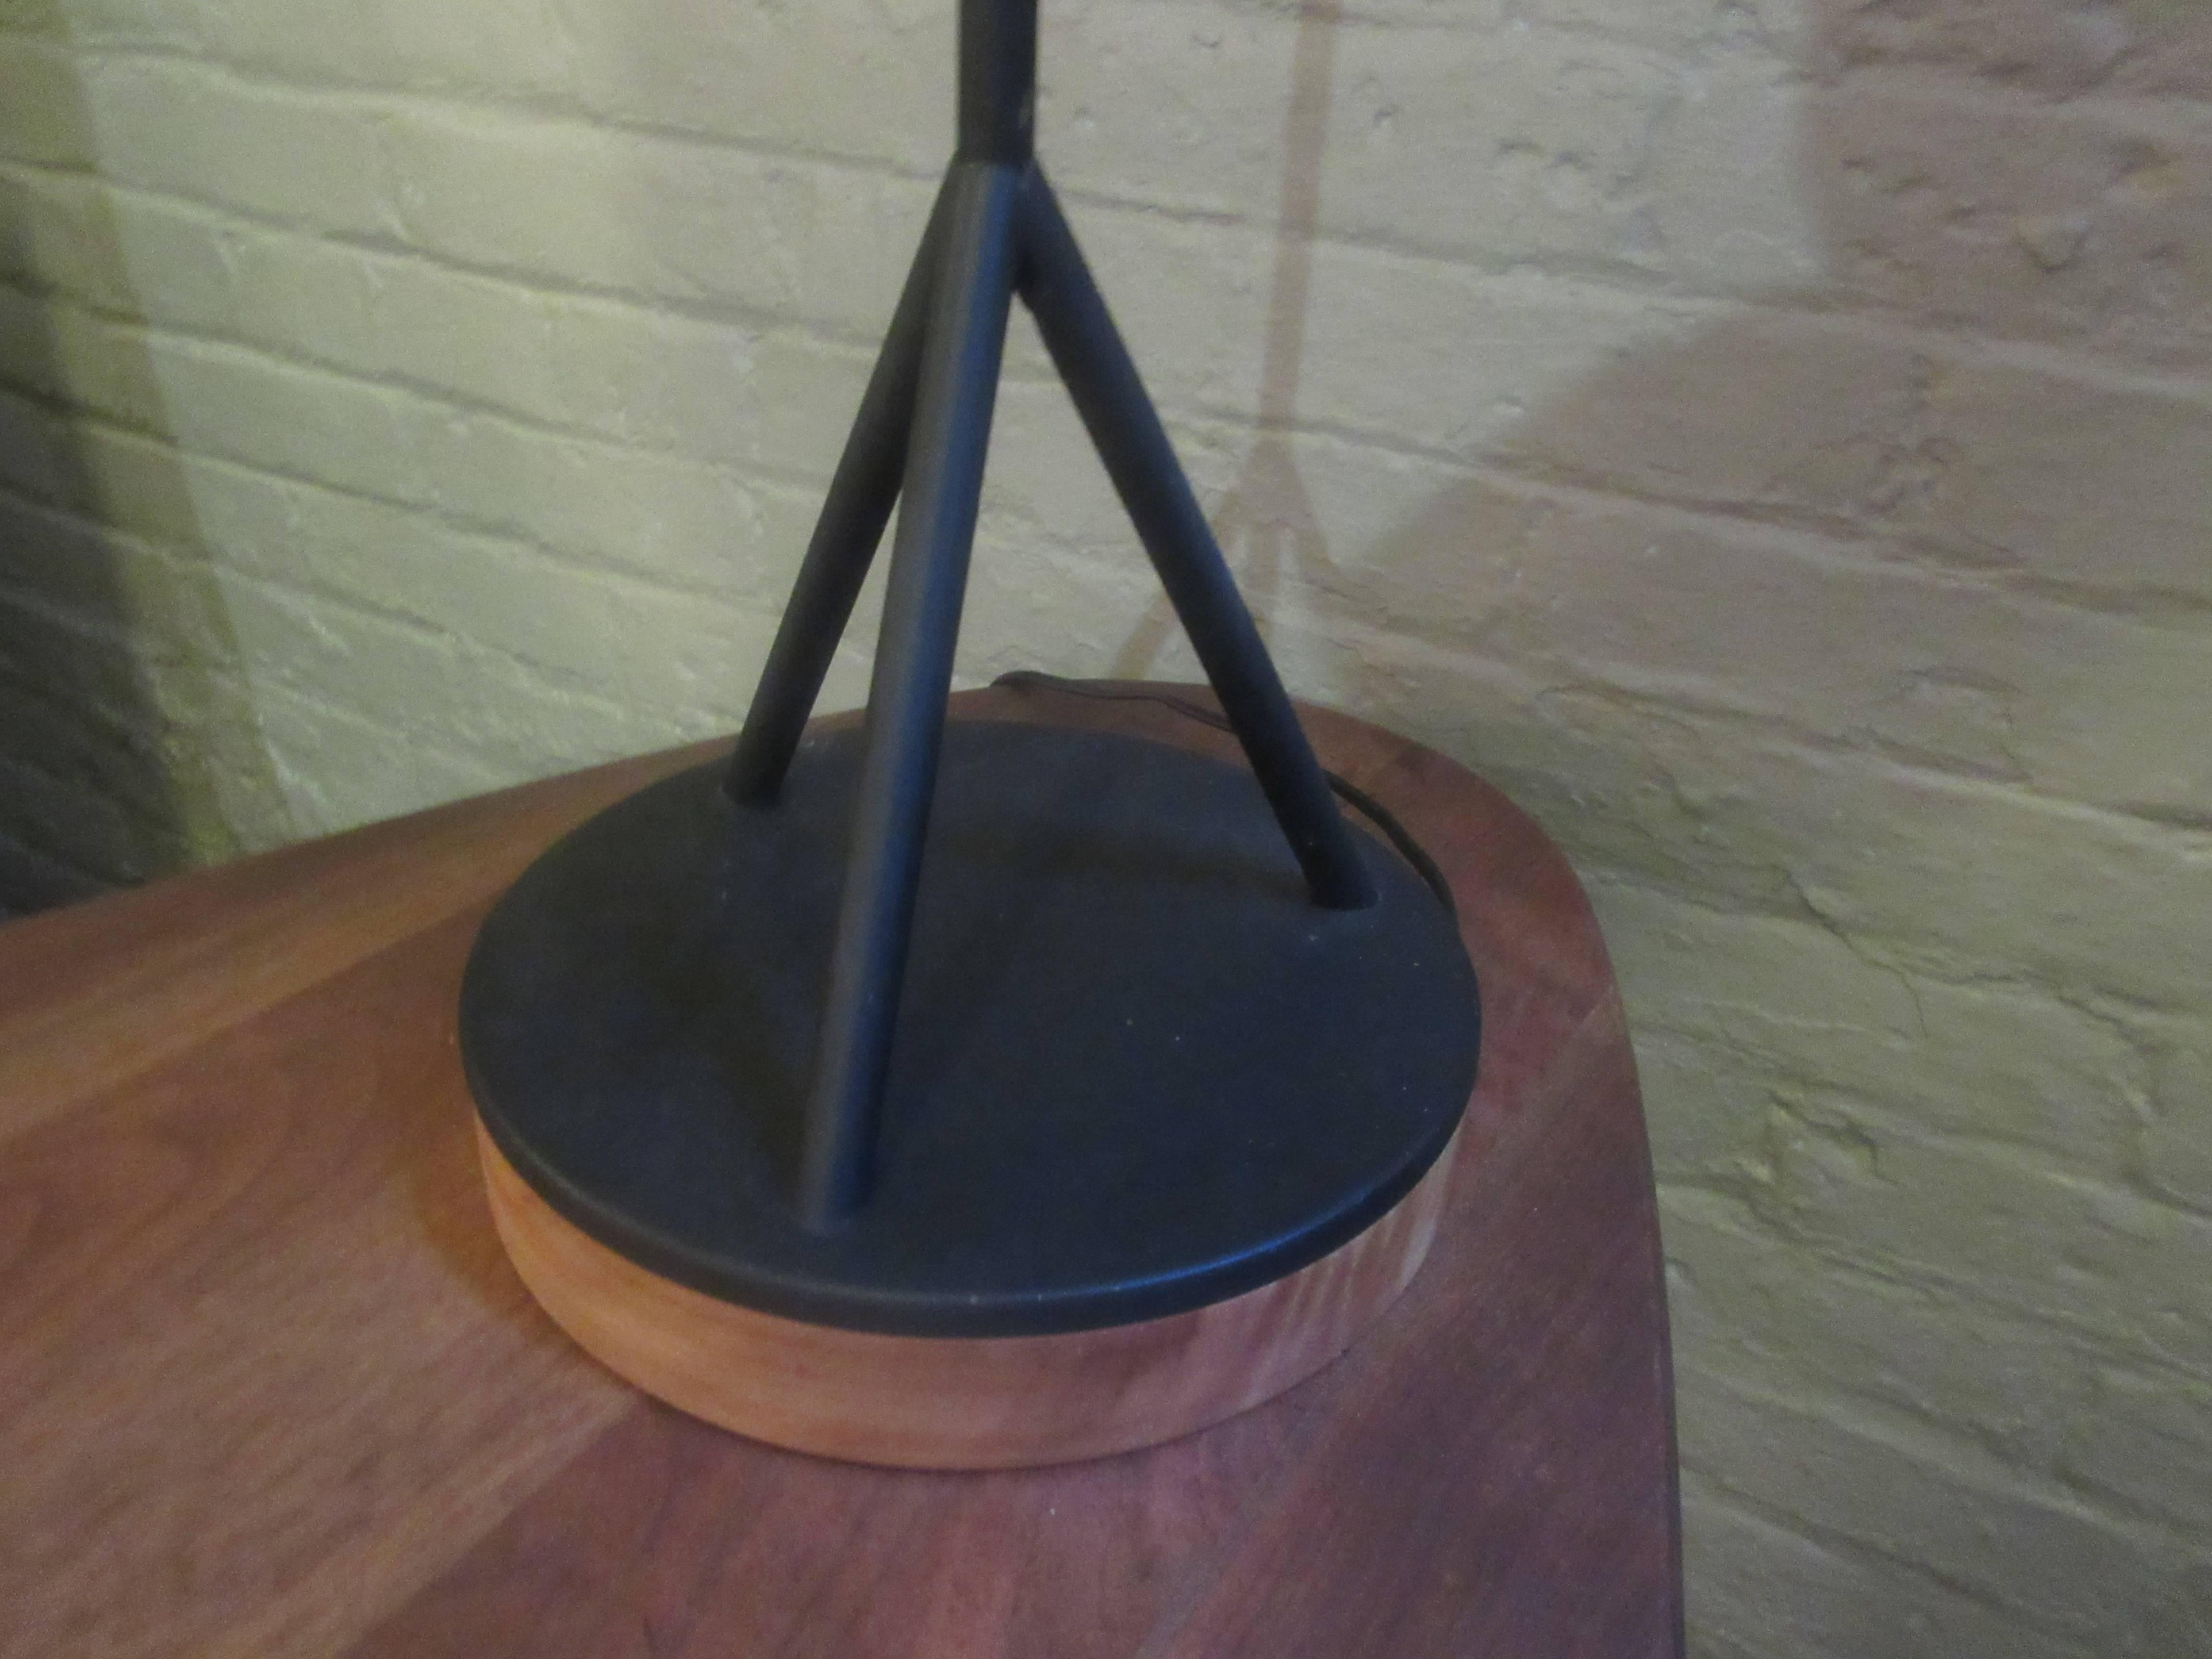 Tubular steel lamp on wooden base with original fiberglass china cap shade.